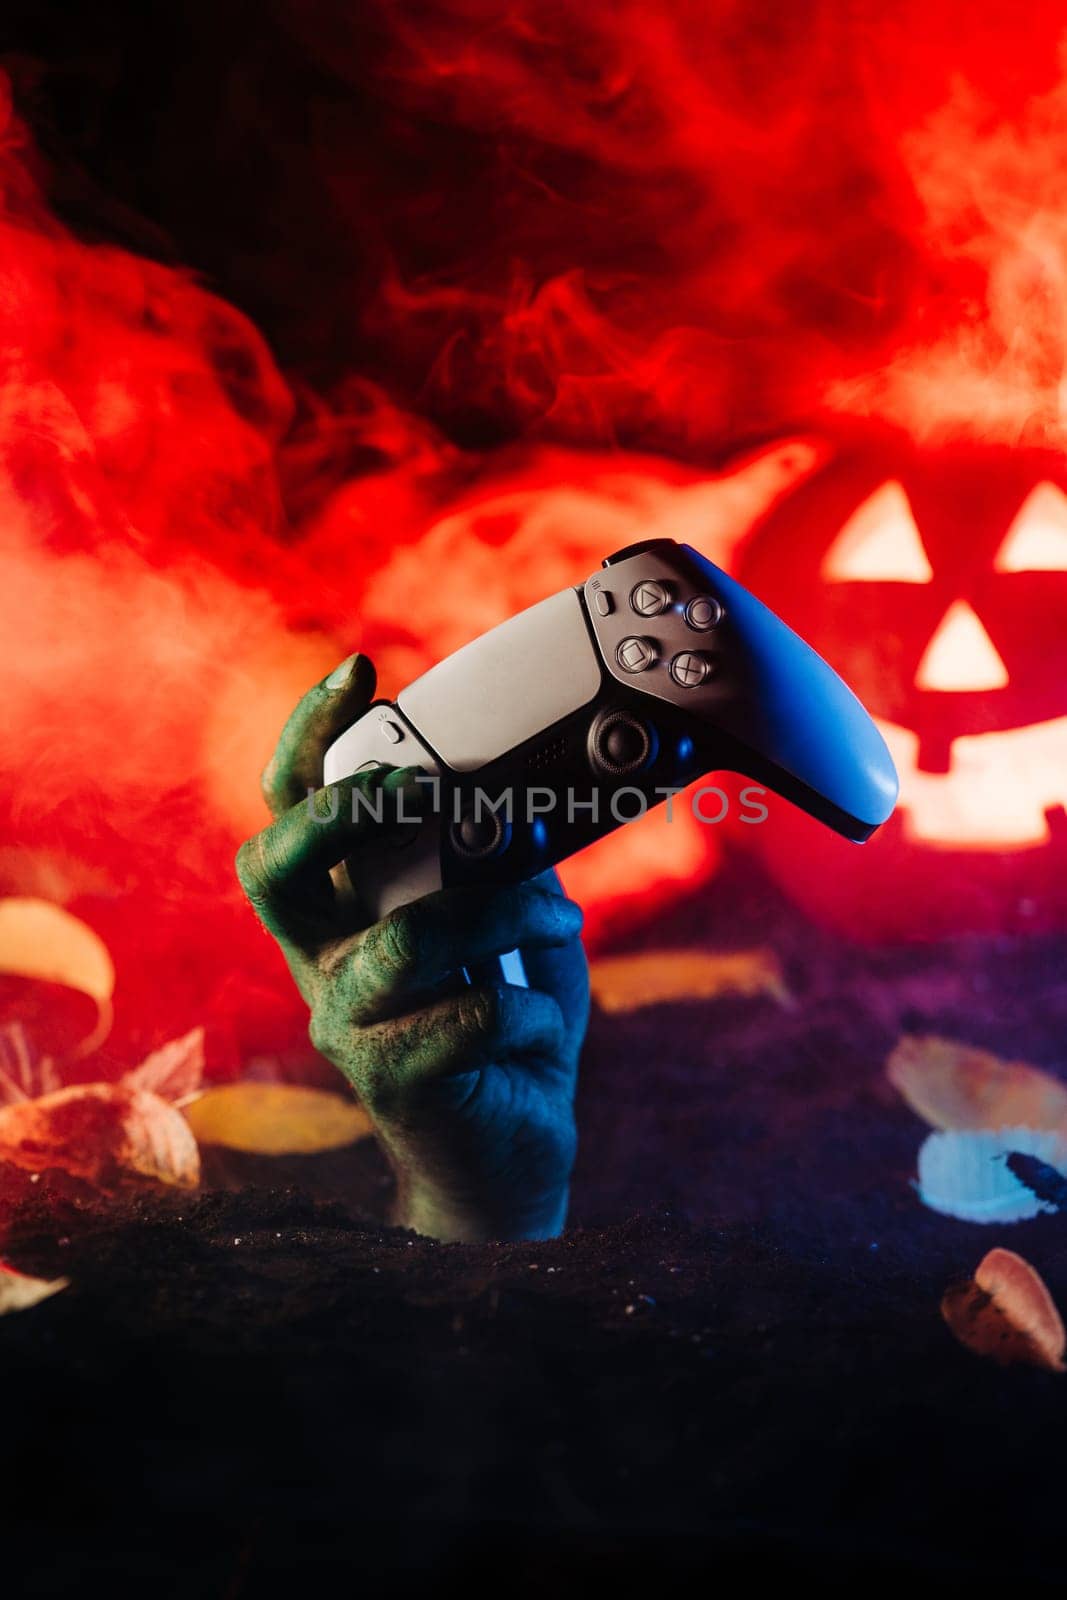 Zombie hand with joypad controller, wireless gamepad.Undead,halloween games sale by kristina_kokhanova